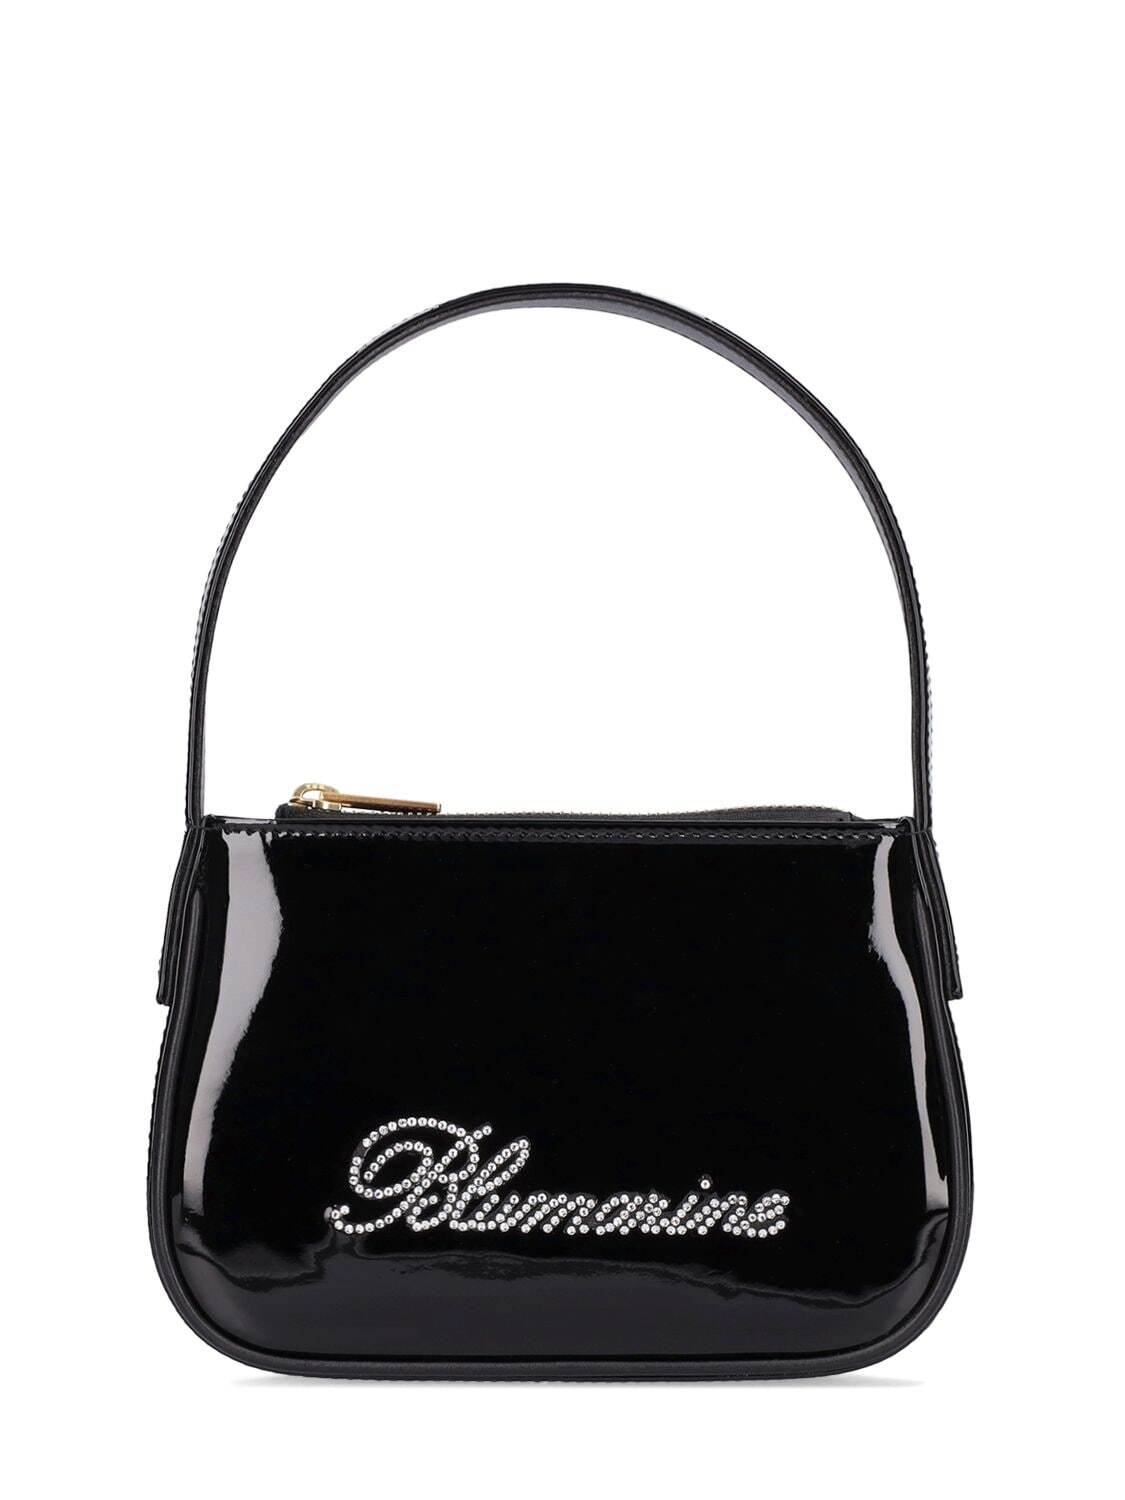 BLUMARINE Patent Leather Top Handle Bag in black